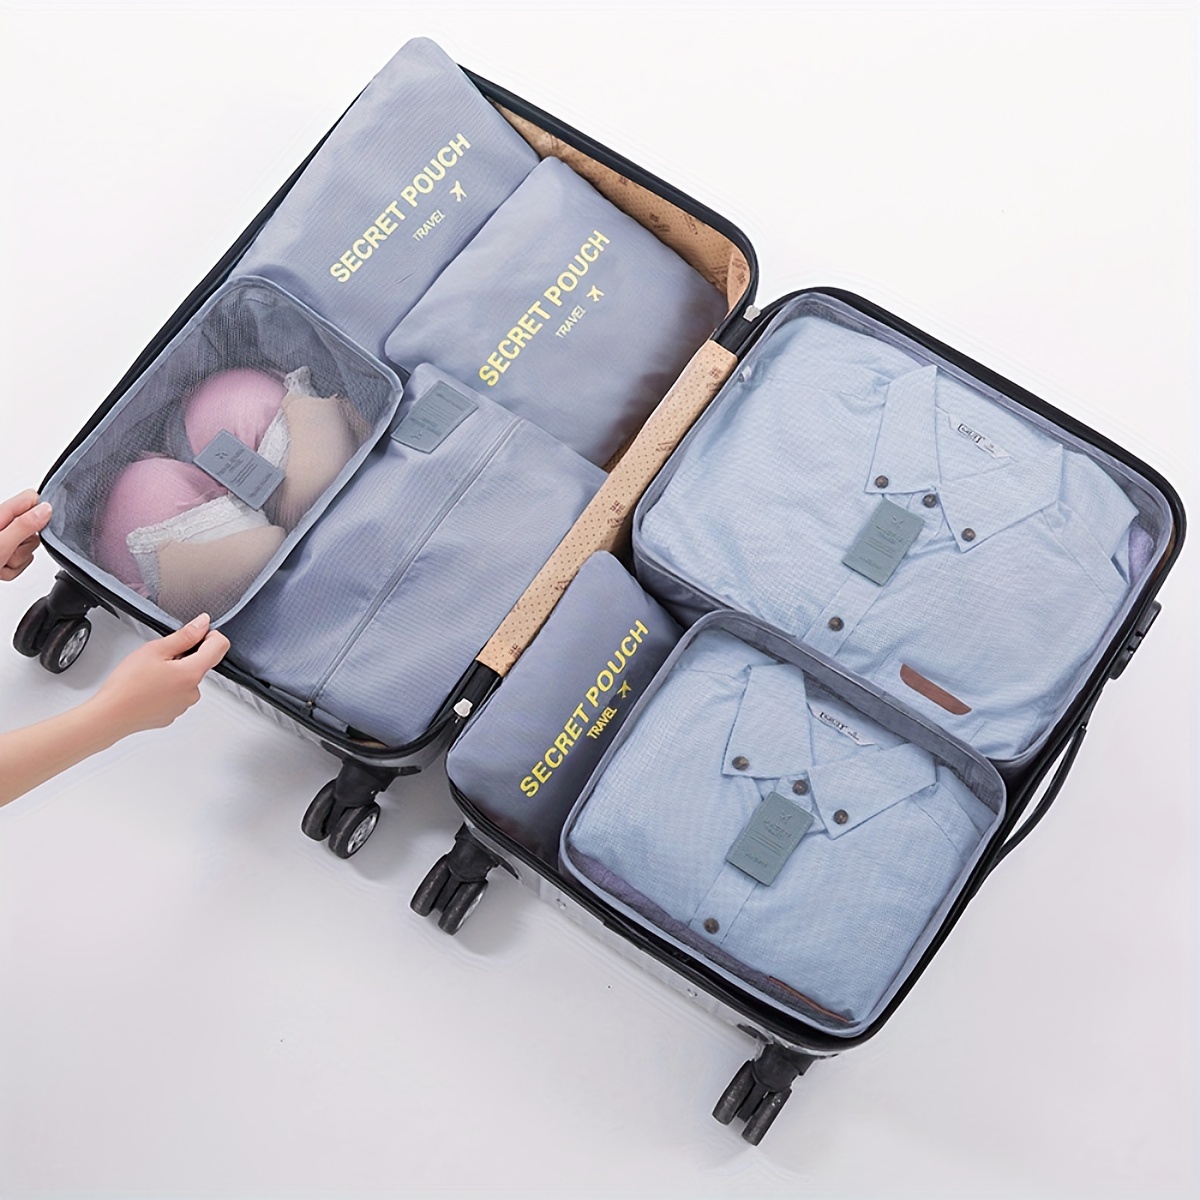 

6/7pcs Travel Clothes Storage Bag, Portable Garment Packing Cube, Large Capacity Luggage Suitcase Organizer